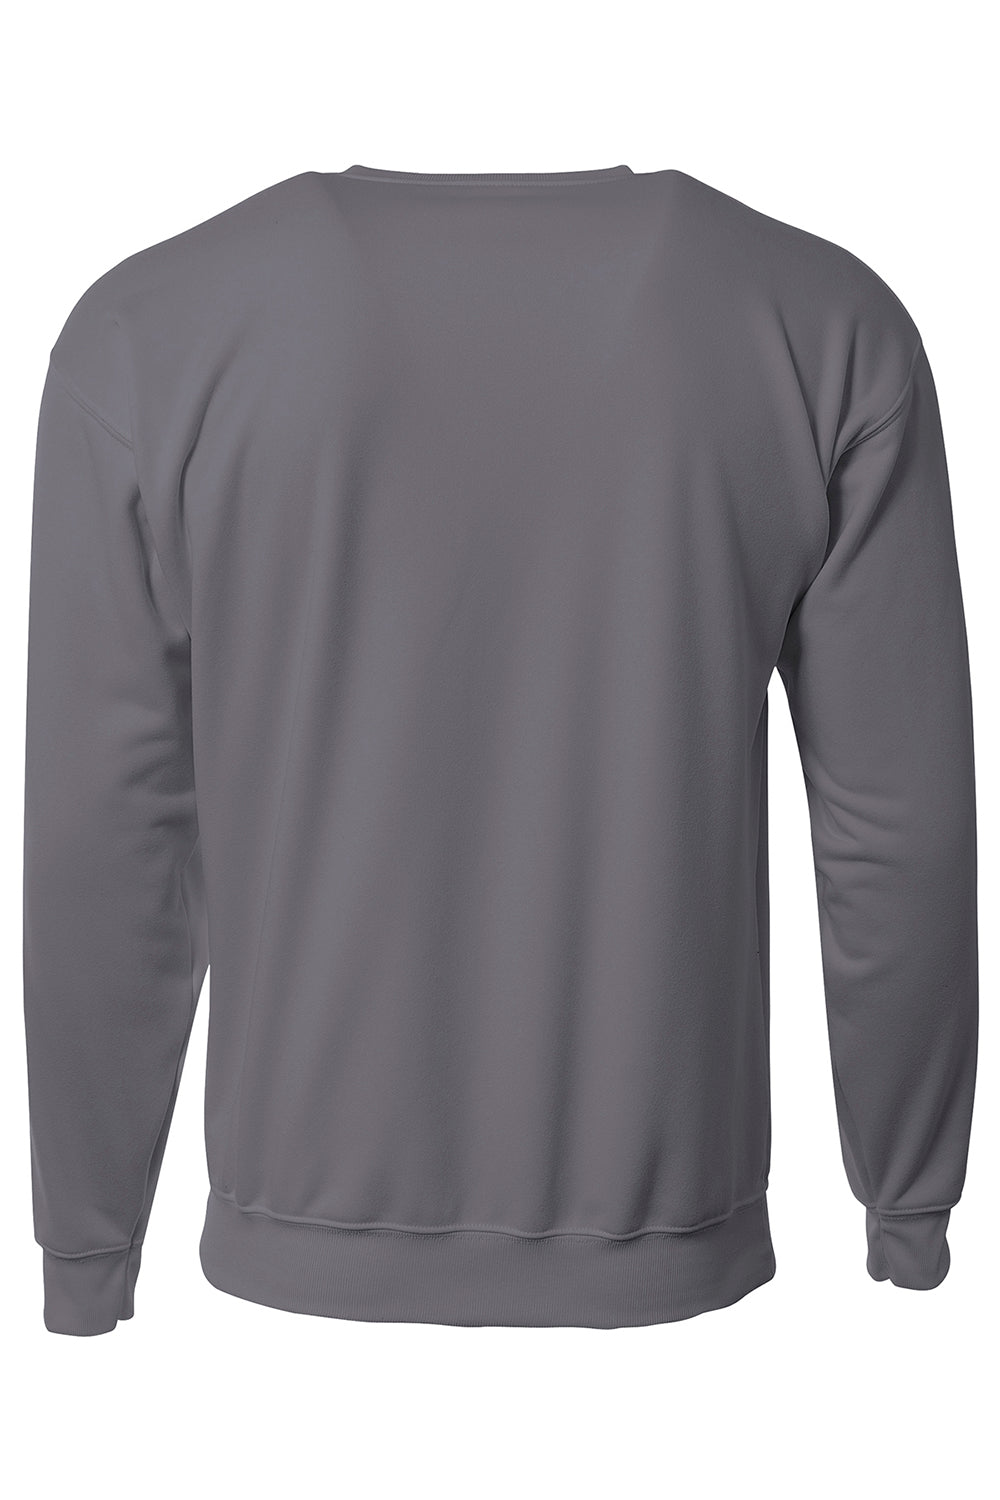 A4 N4275 Mens Sprint Tech Fleece Crewneck Sweatshirt Graphite Grey Flat Back